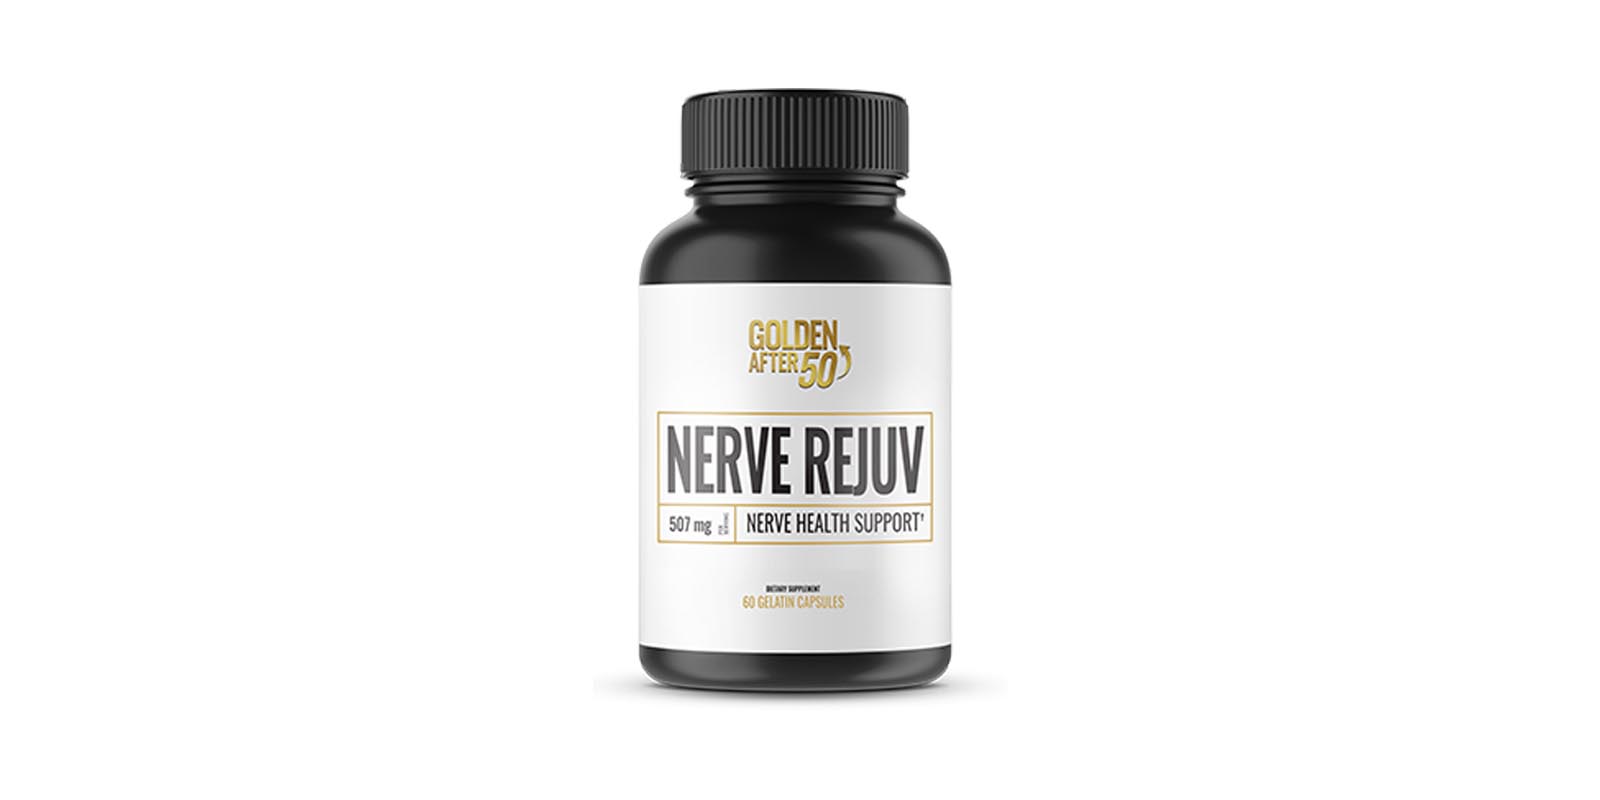 Nerve Rejuv Reviews